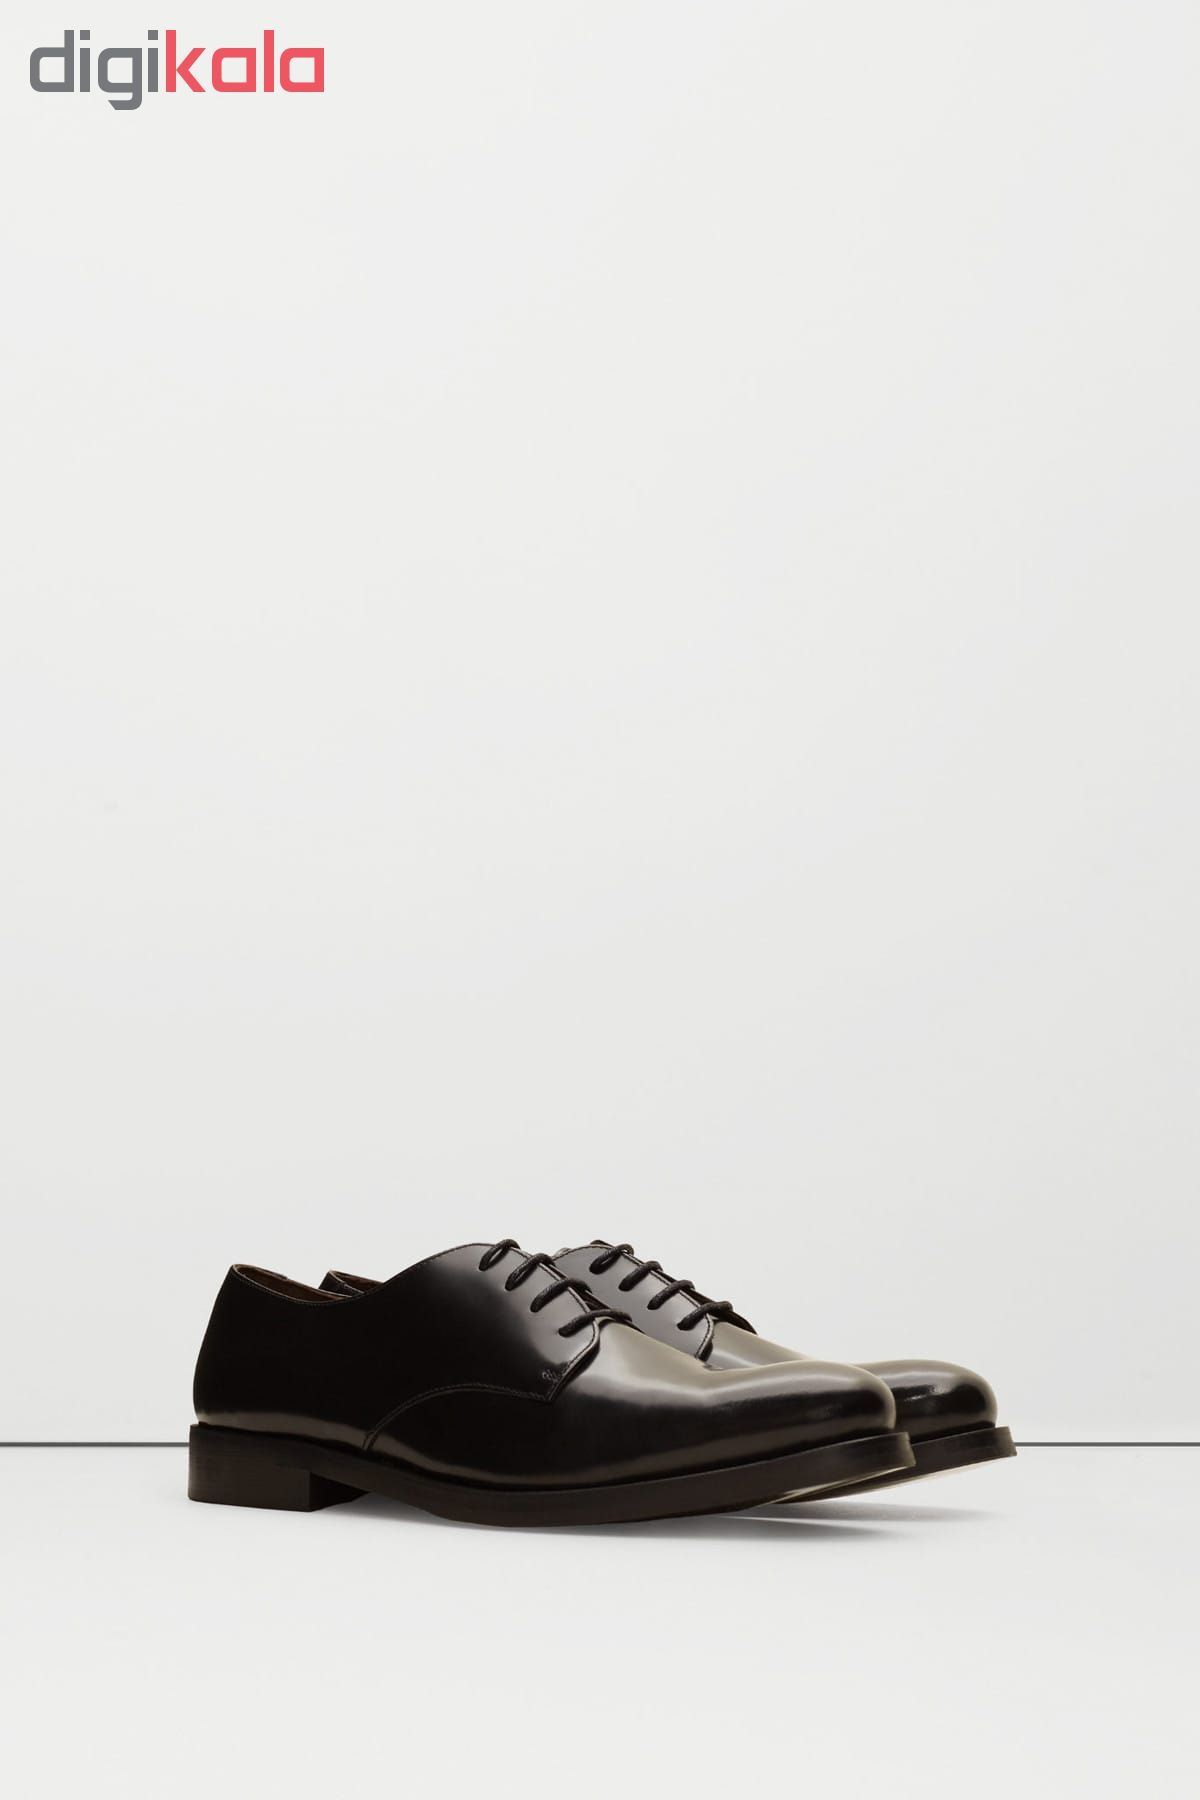 کفش مردانه  مدل LEATHER BLUCHER -  - 2